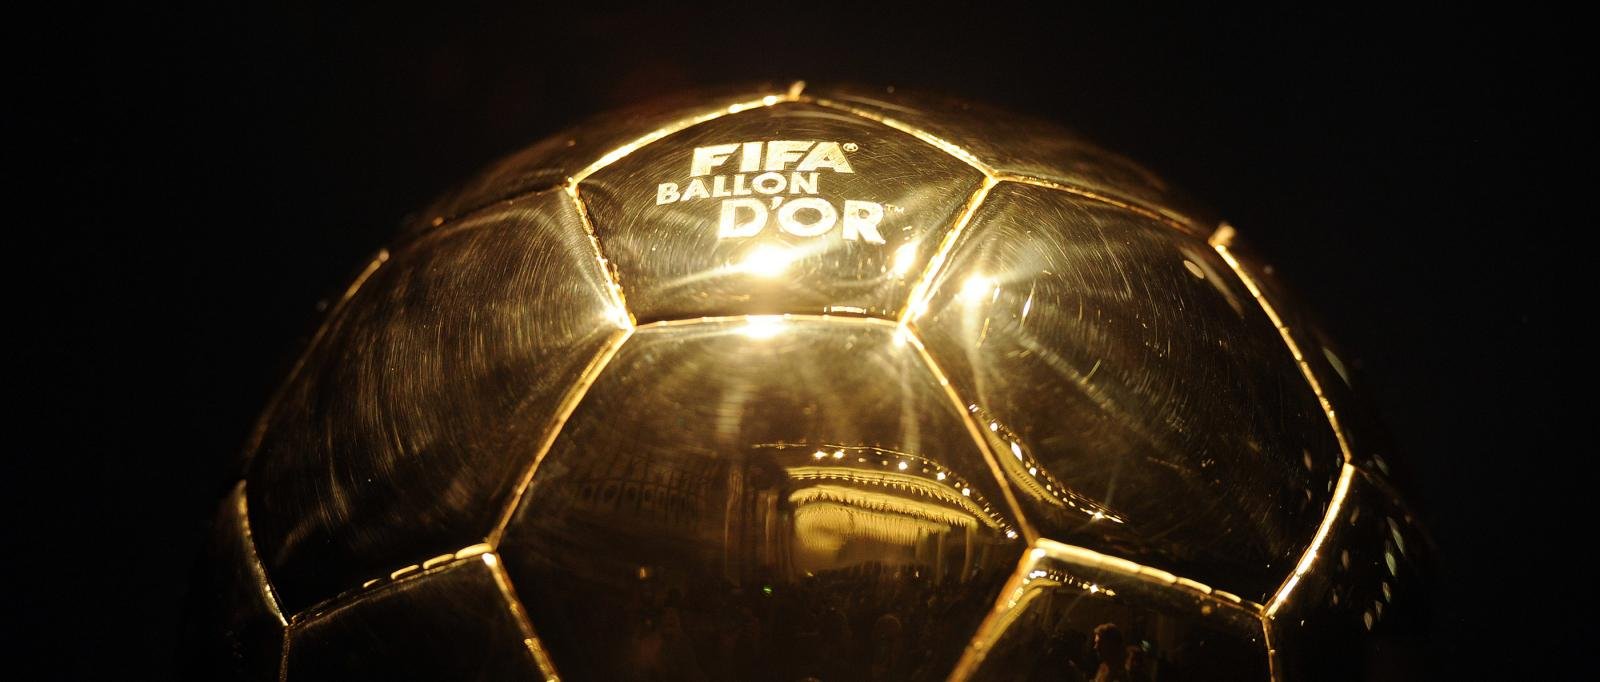 Messi, Ronaldo or Neymar: Who should win the Ballon d’Or?